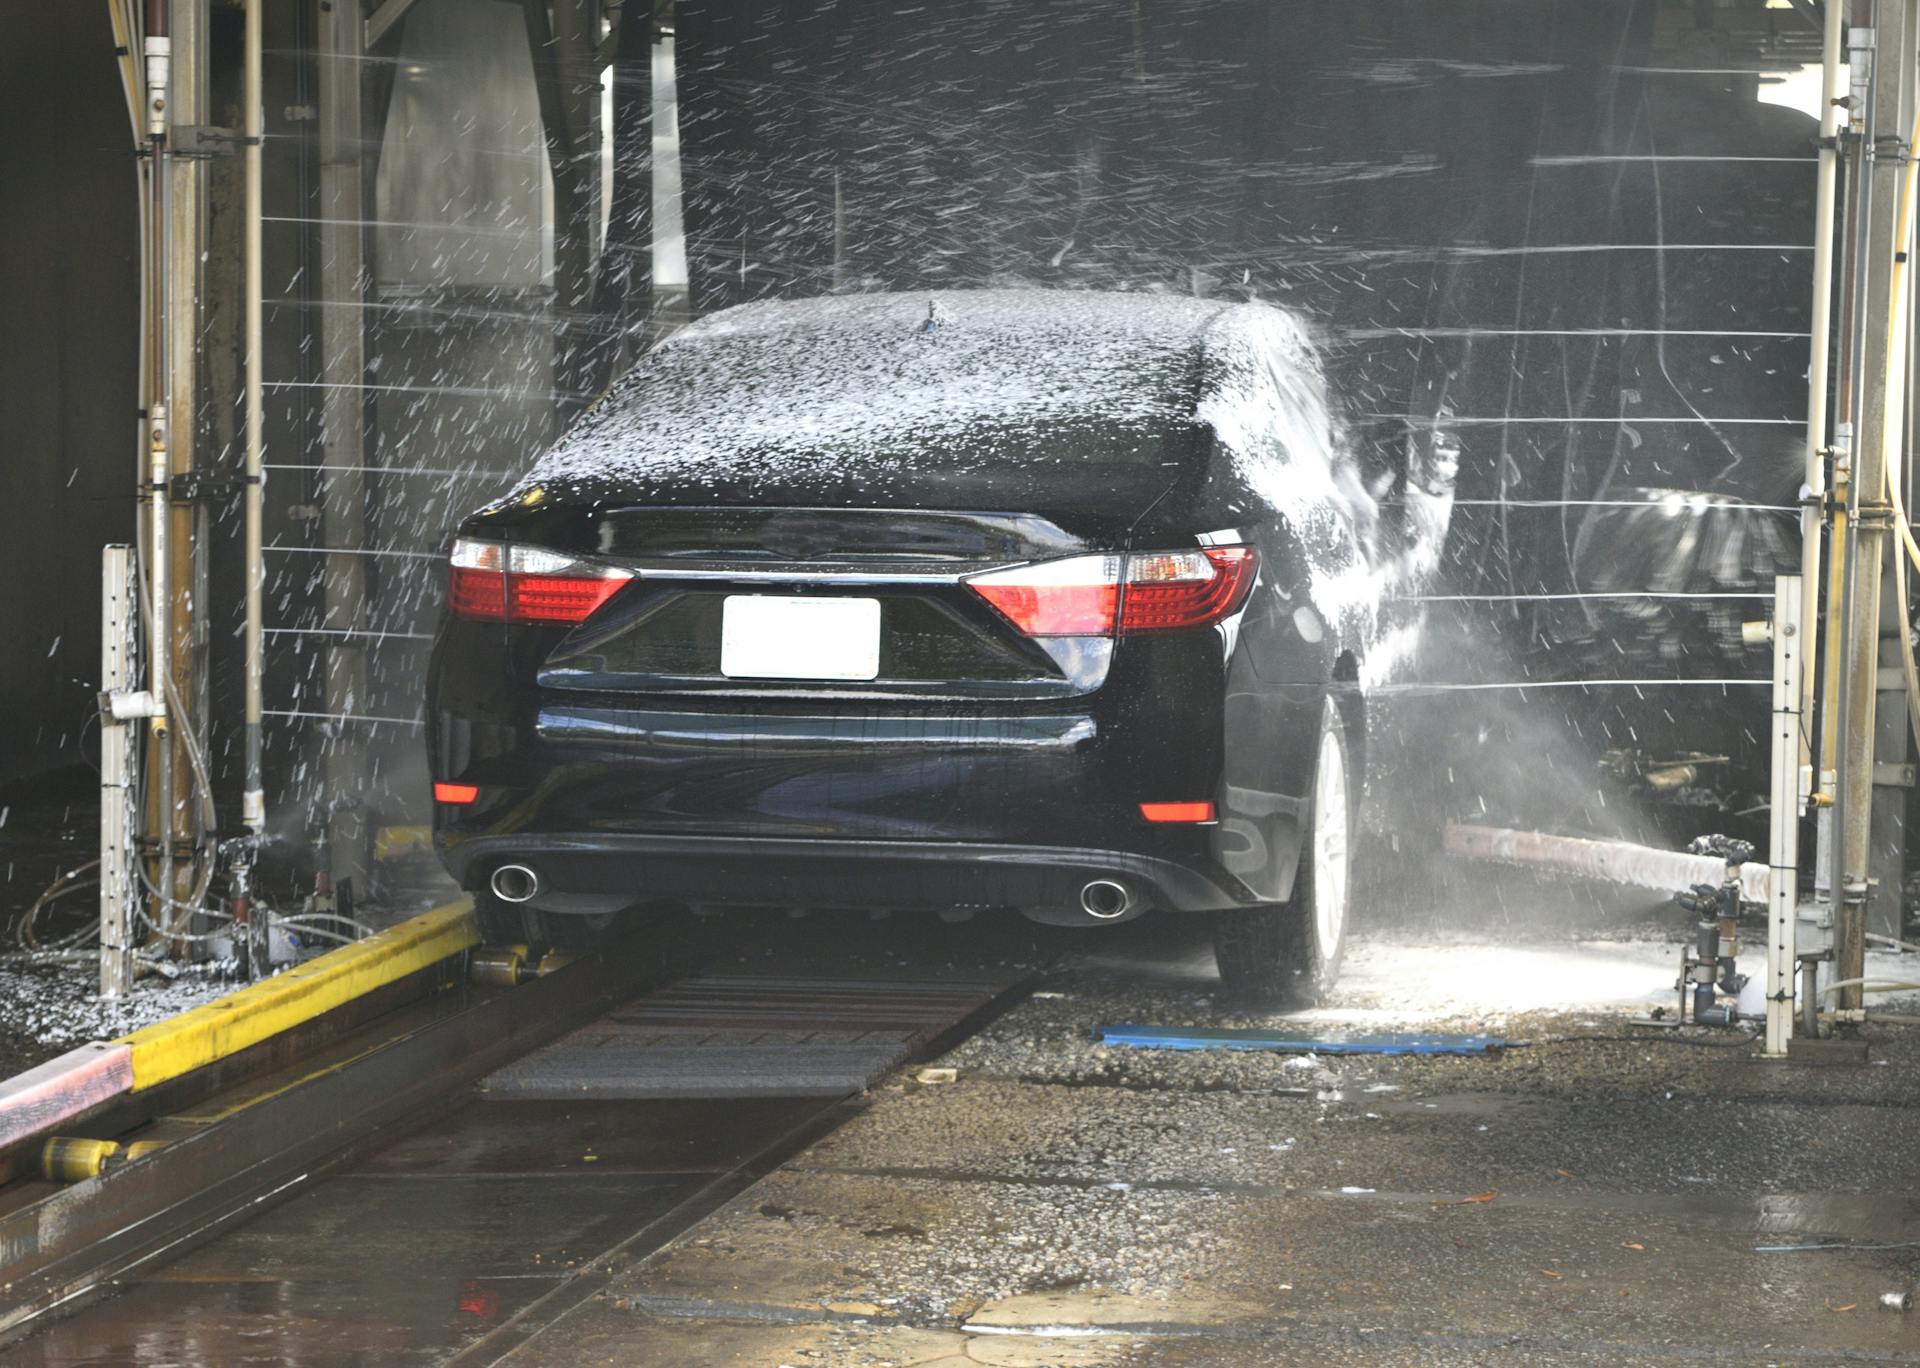 A car in a car wash | Source: Pexels